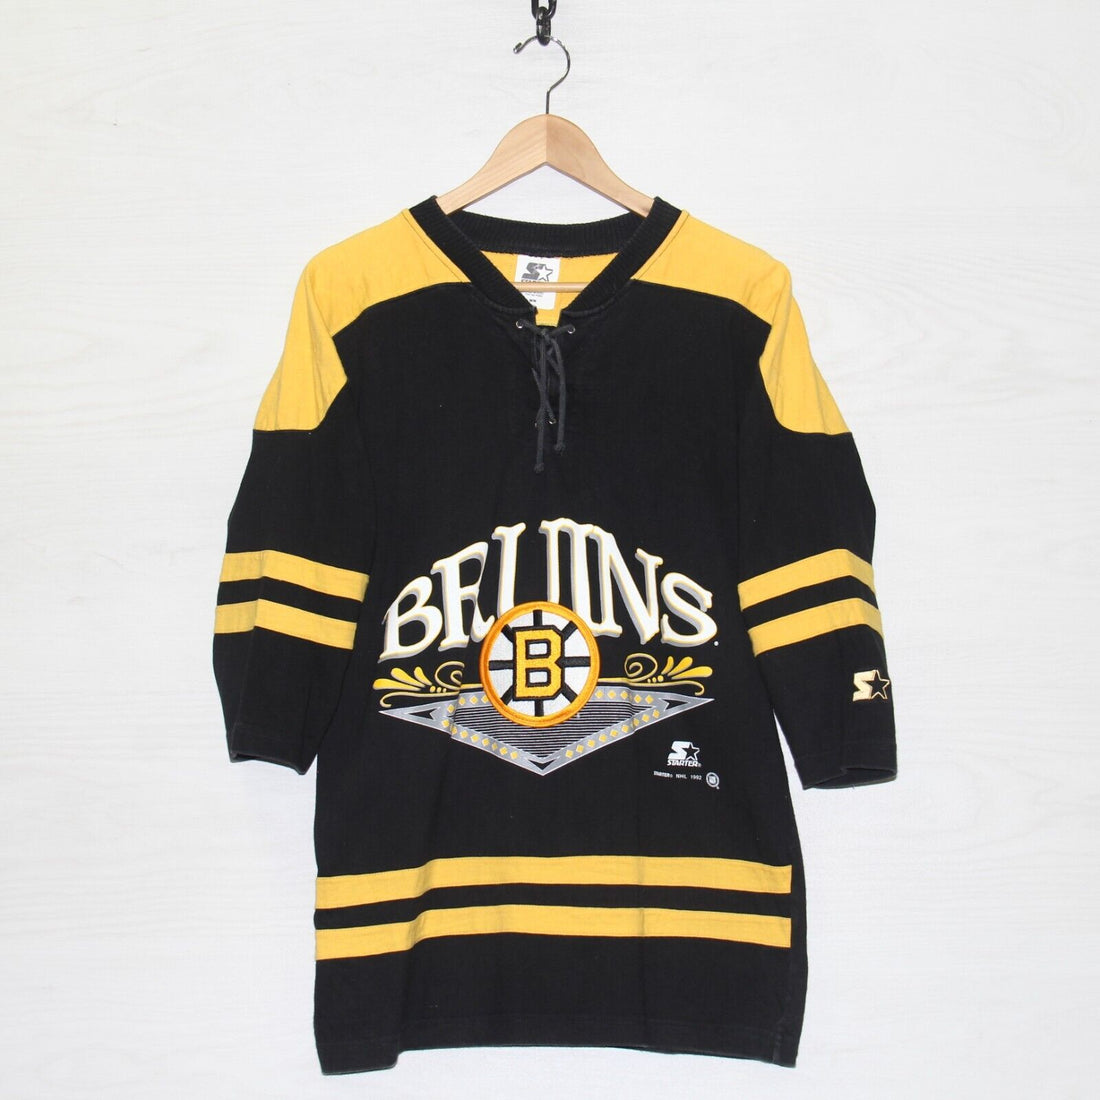 Vintage Boston Bruins Starter Parka Hockey Jacket, Size Medium